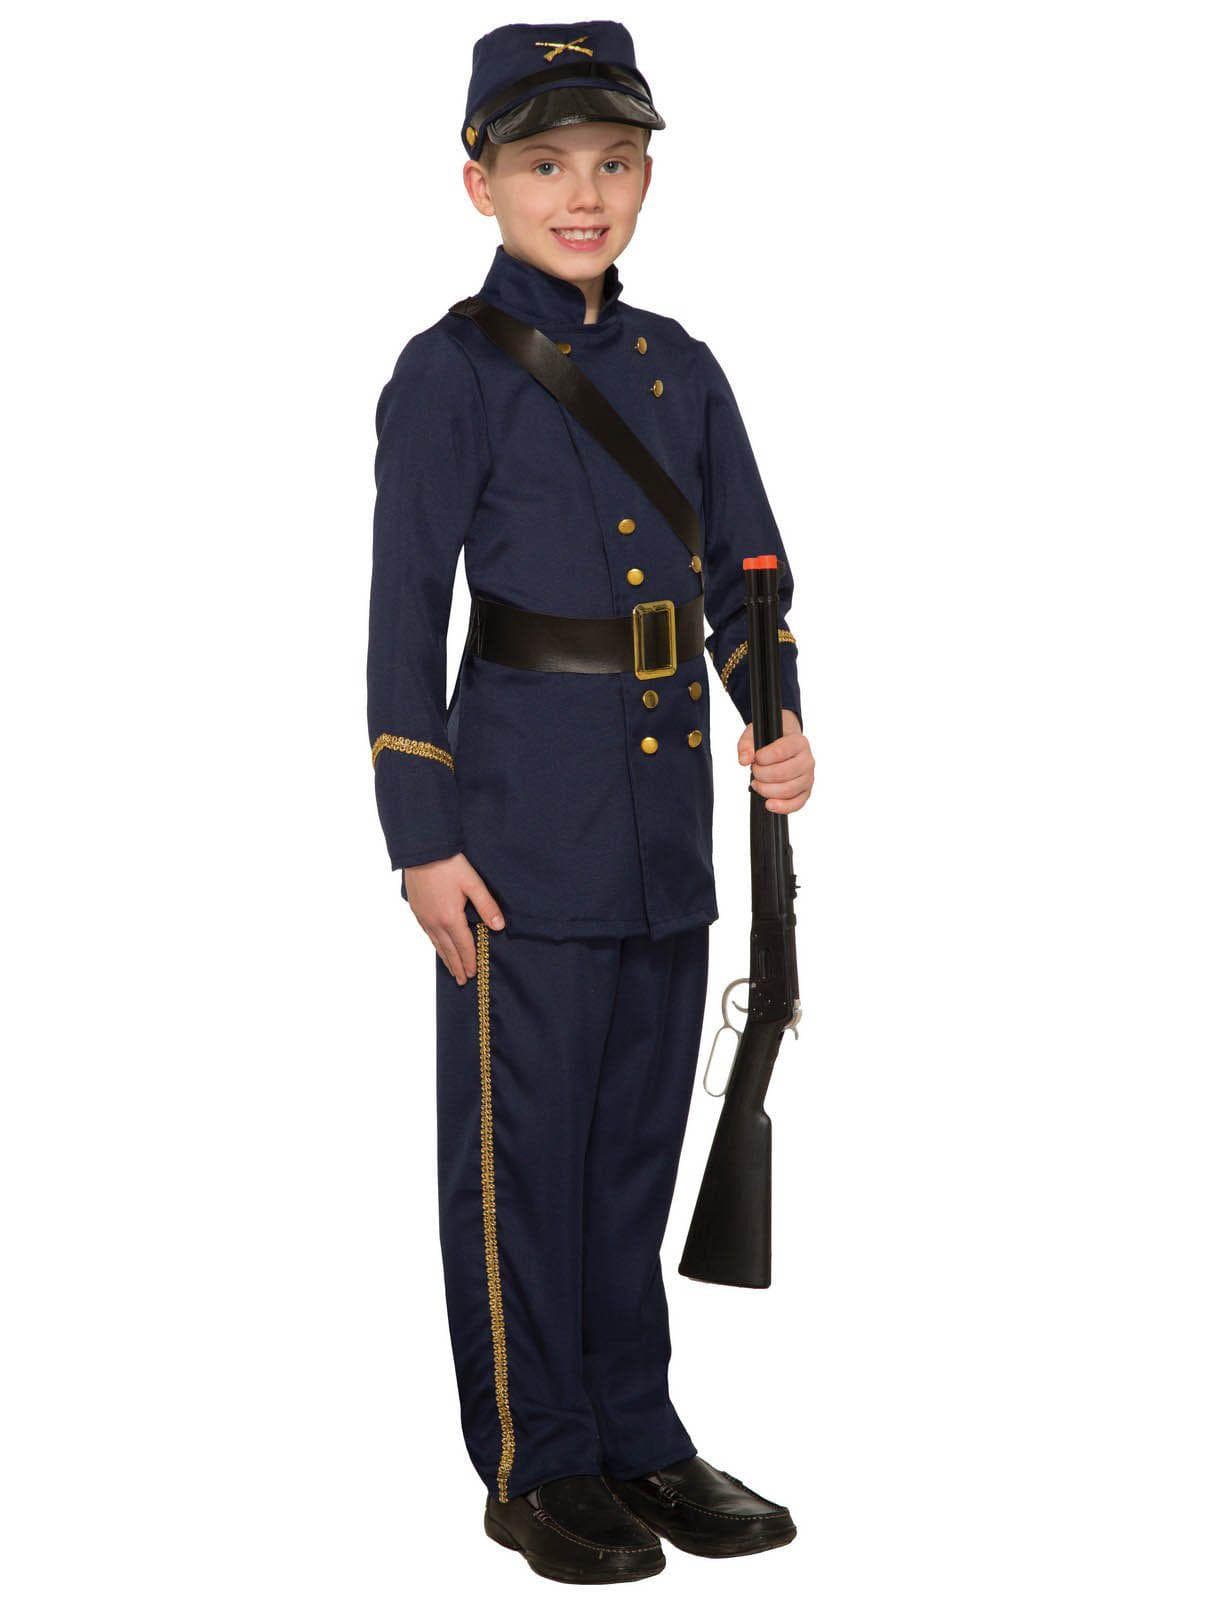 Kid's Civil War Soldier Costume - costumes.com